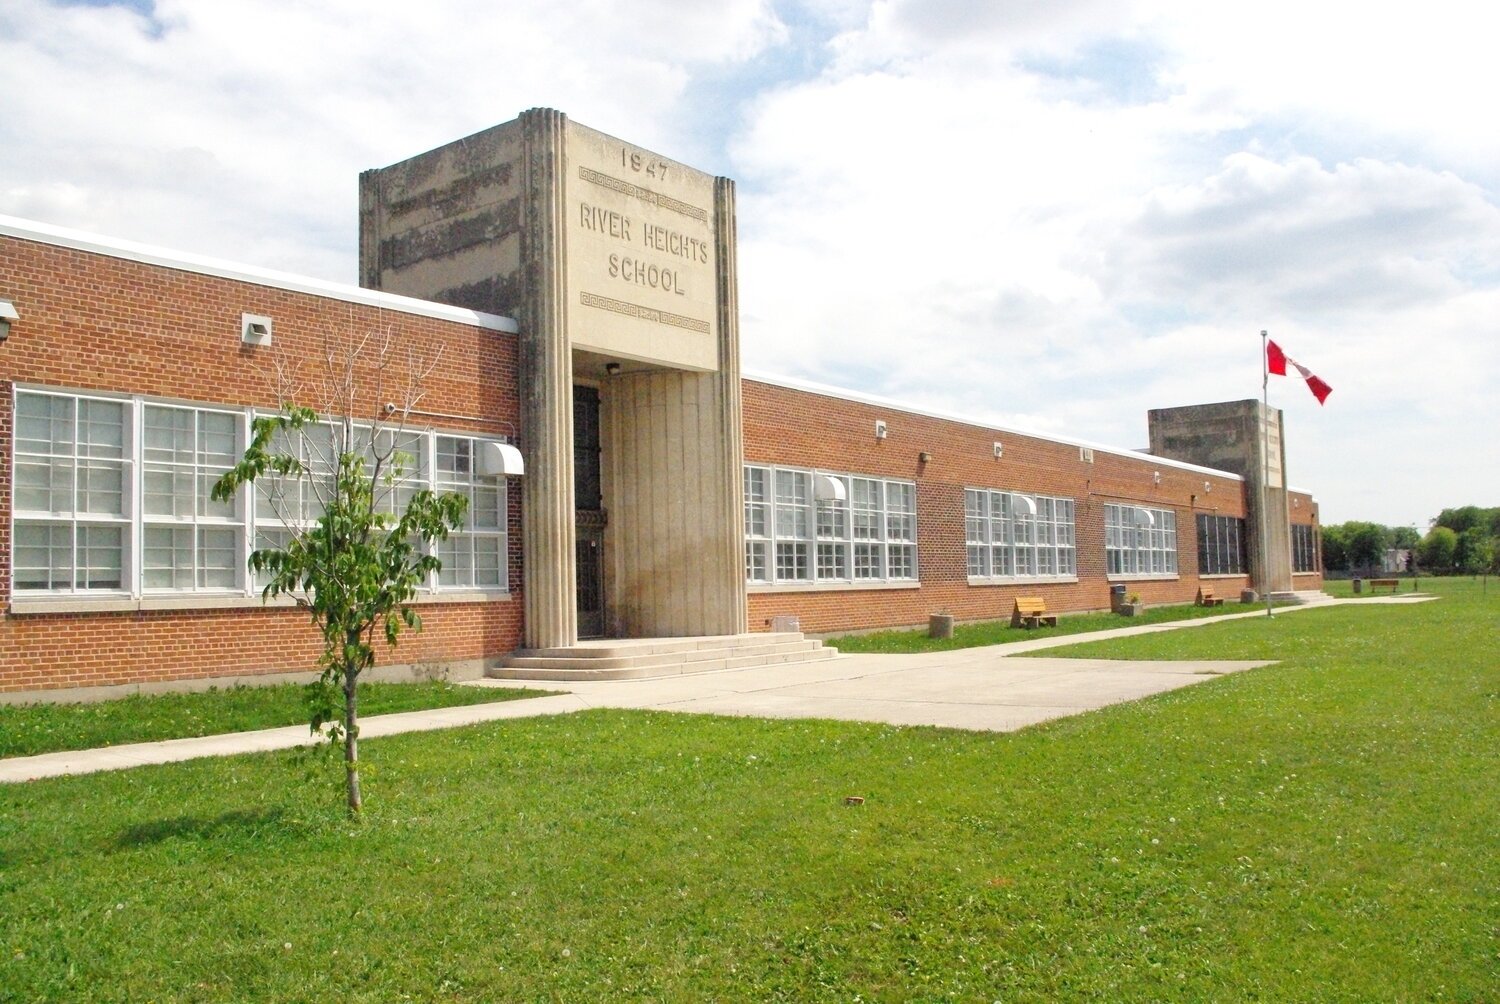 Ecole River Heights School